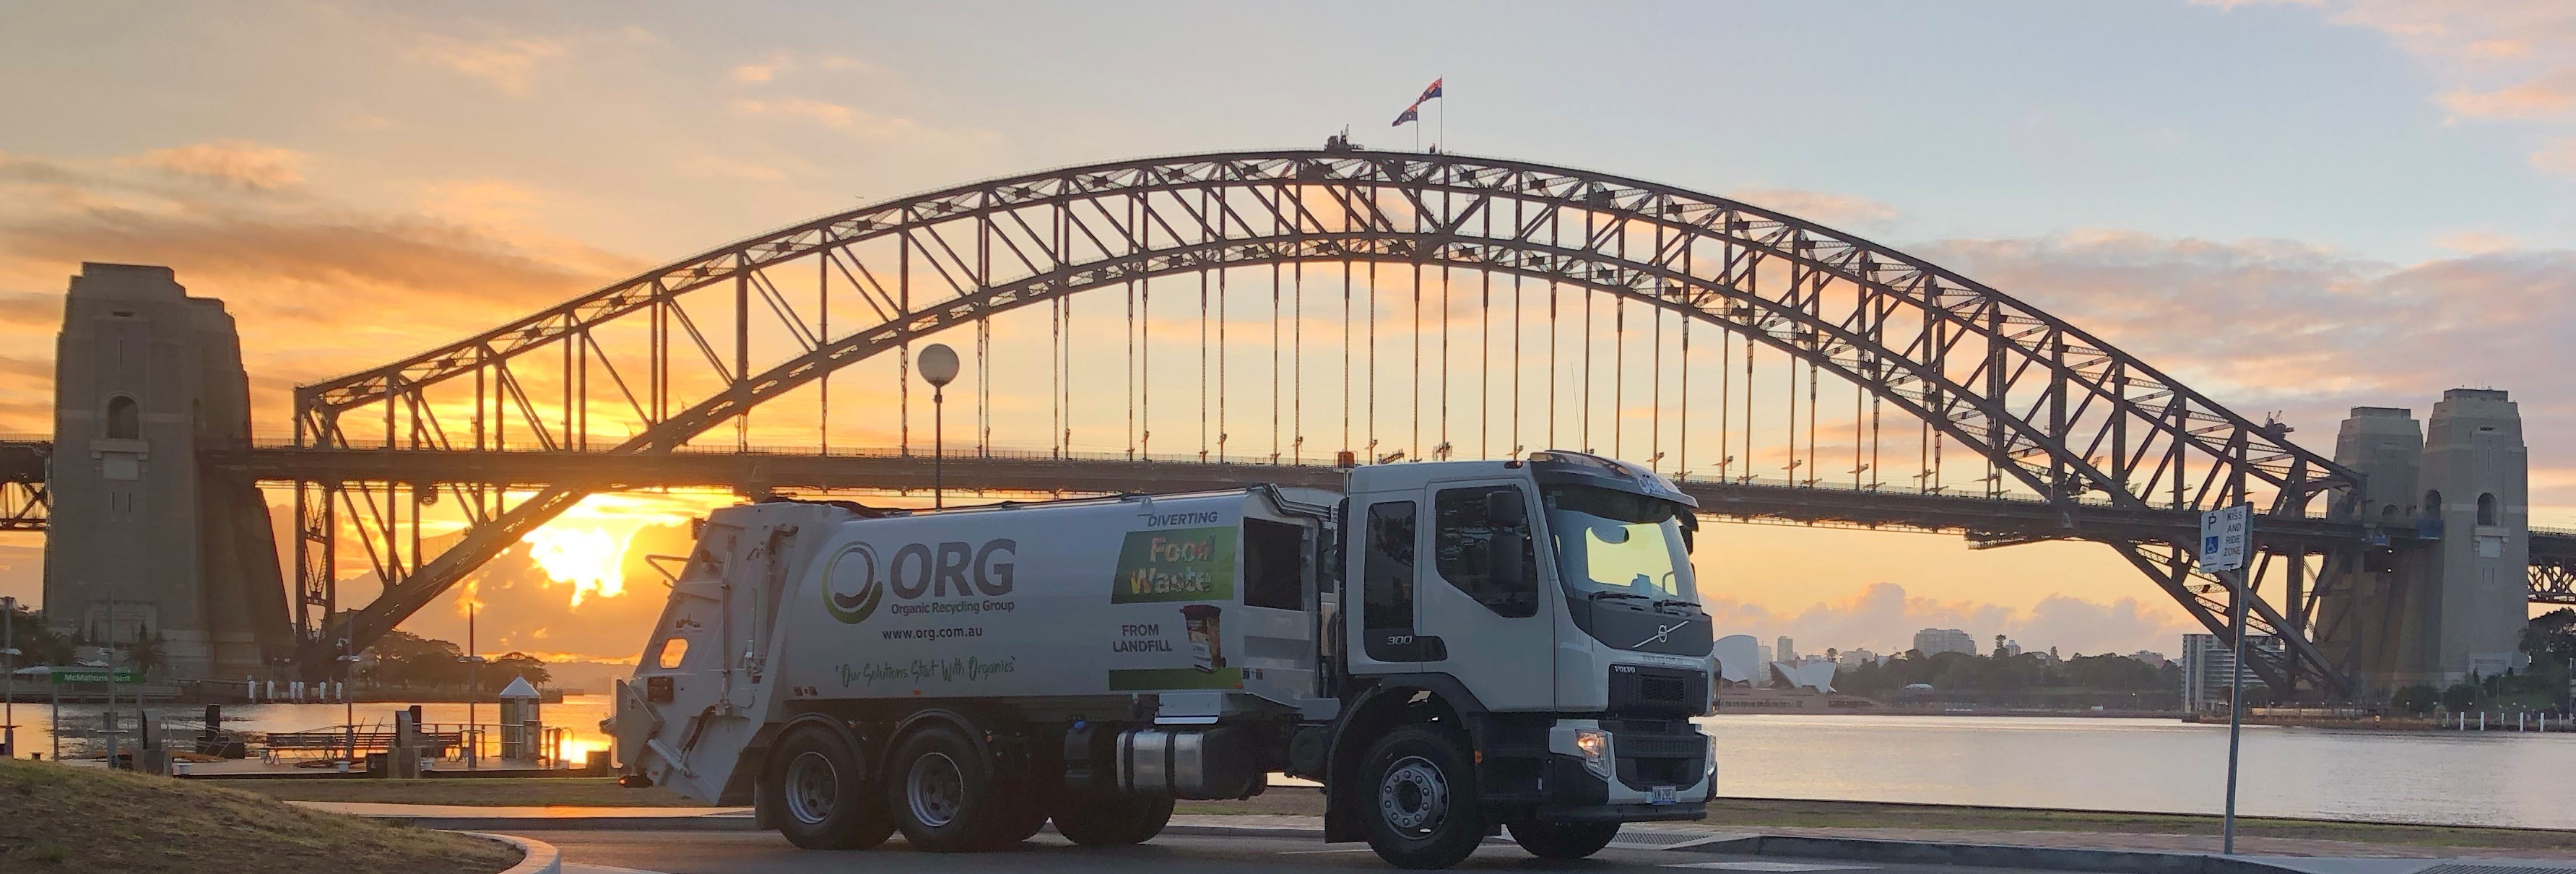 ORG truck in front of the Sydney Harbour Bridge